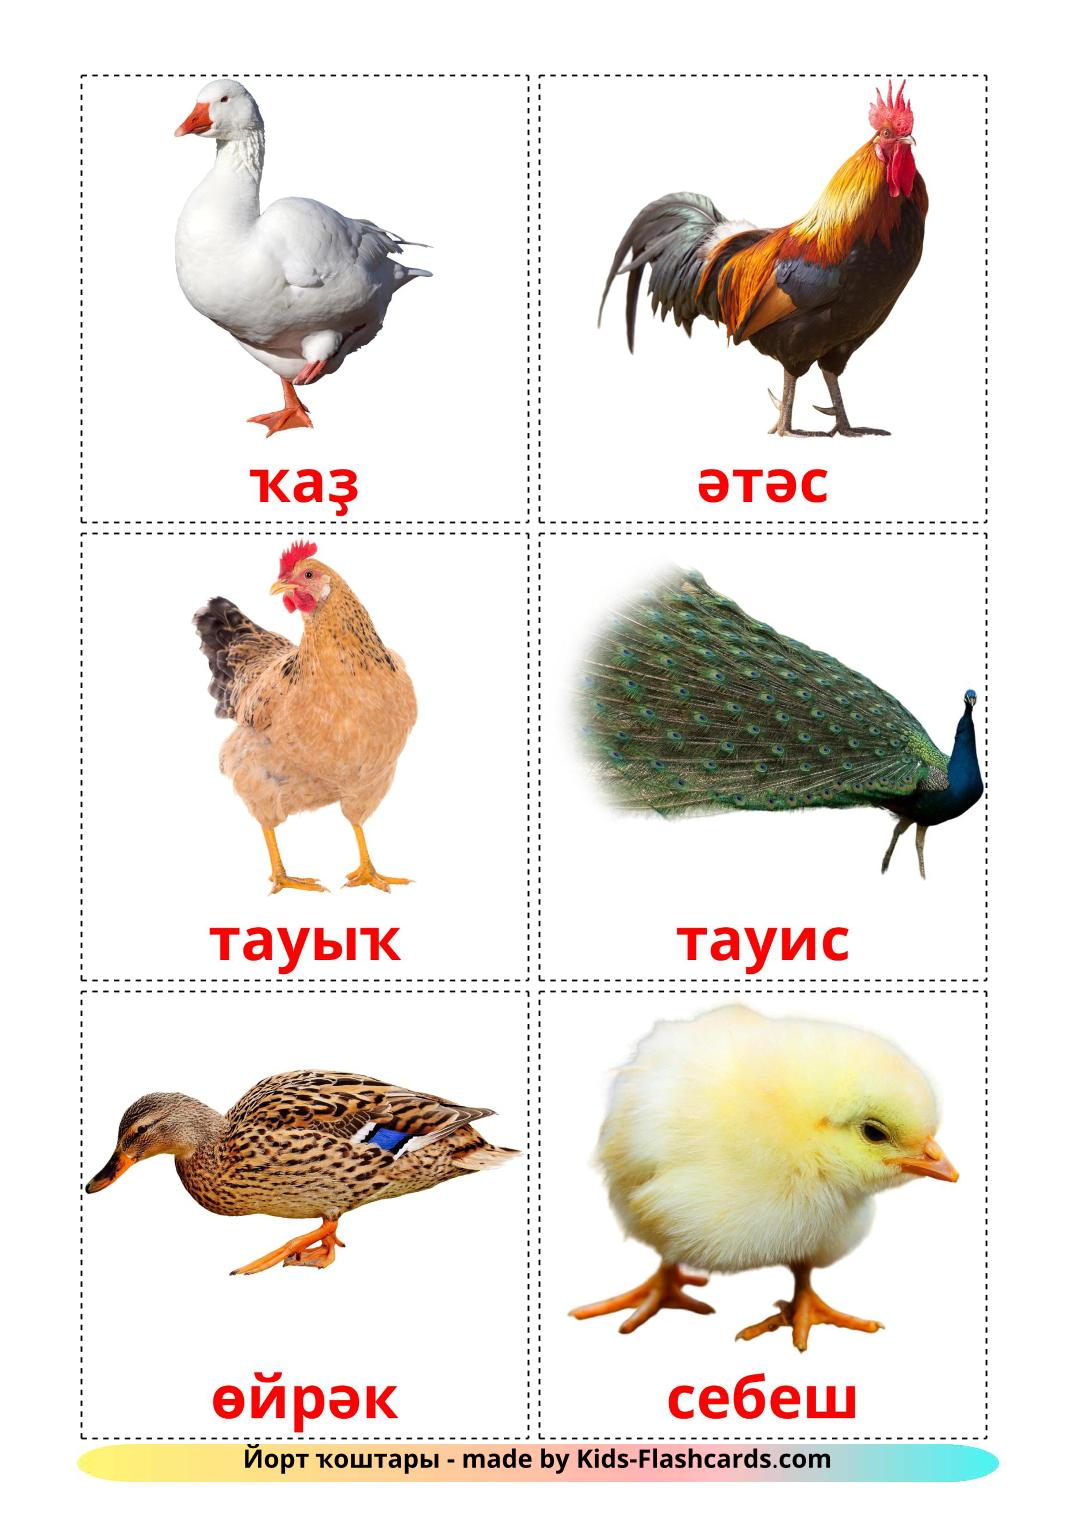 Aves de granja - 11 fichas de brashkir para imprimir gratis 